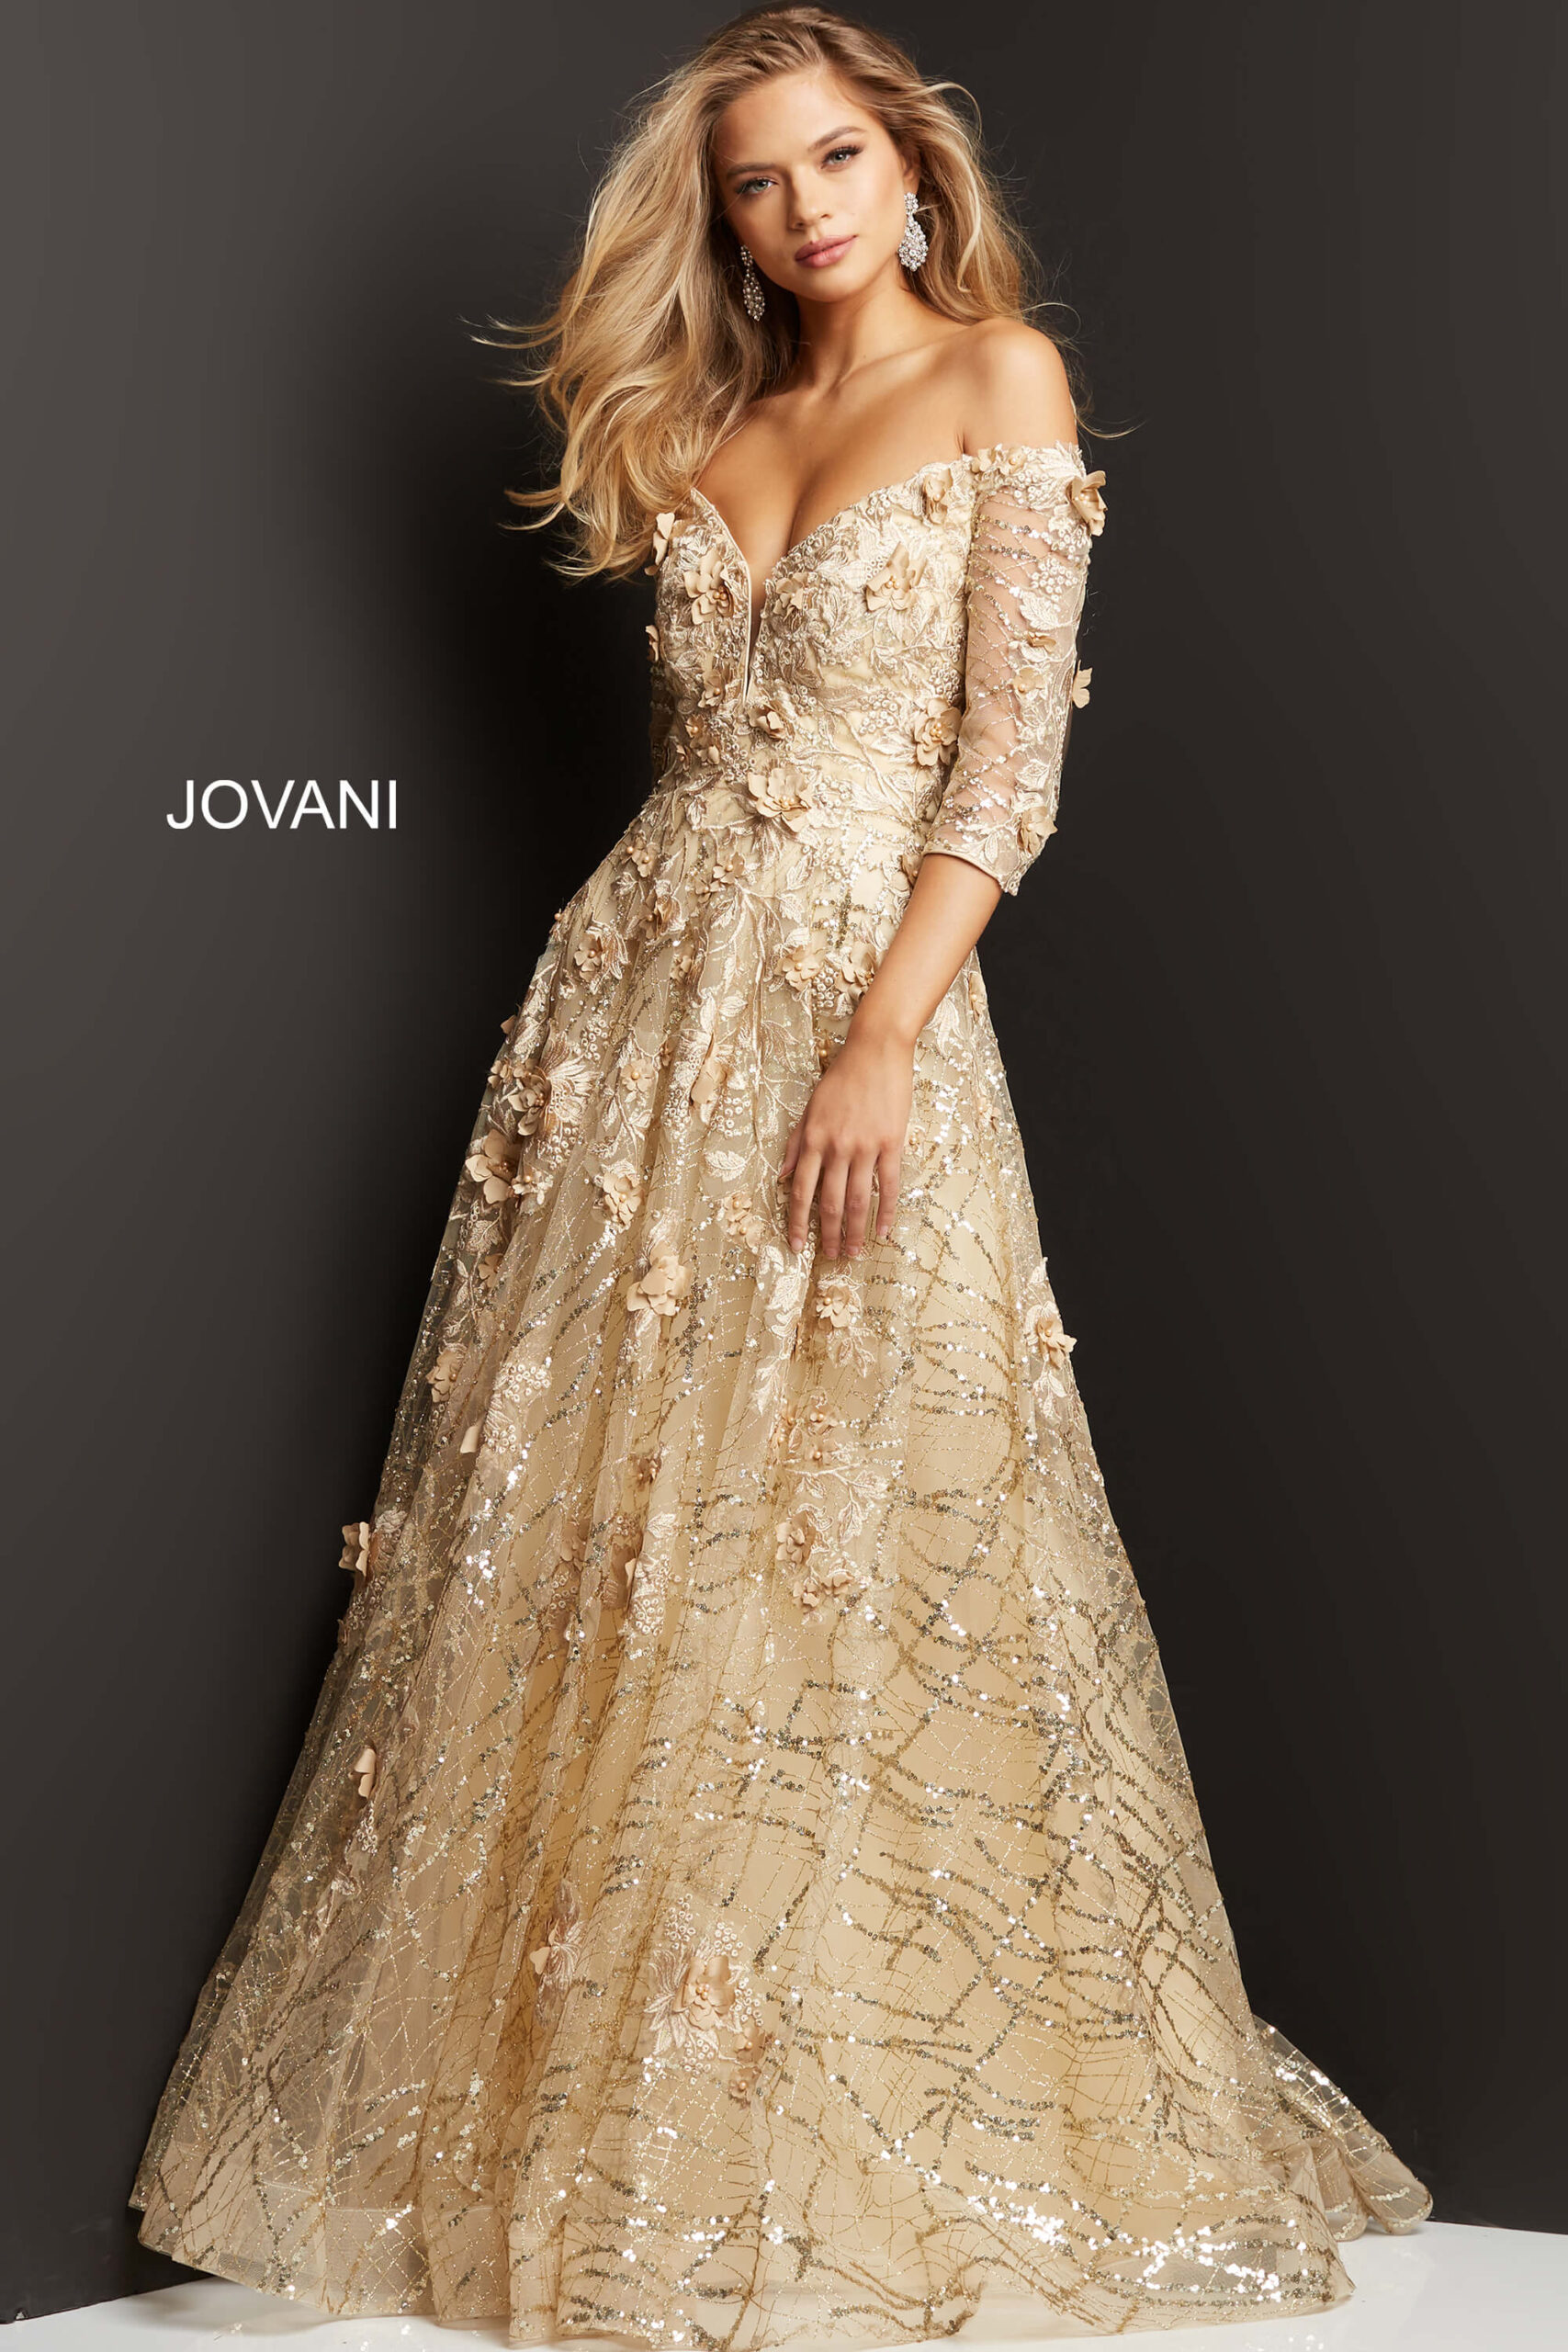 Jovani 06636 Cream Floral Embellished A Line Gown